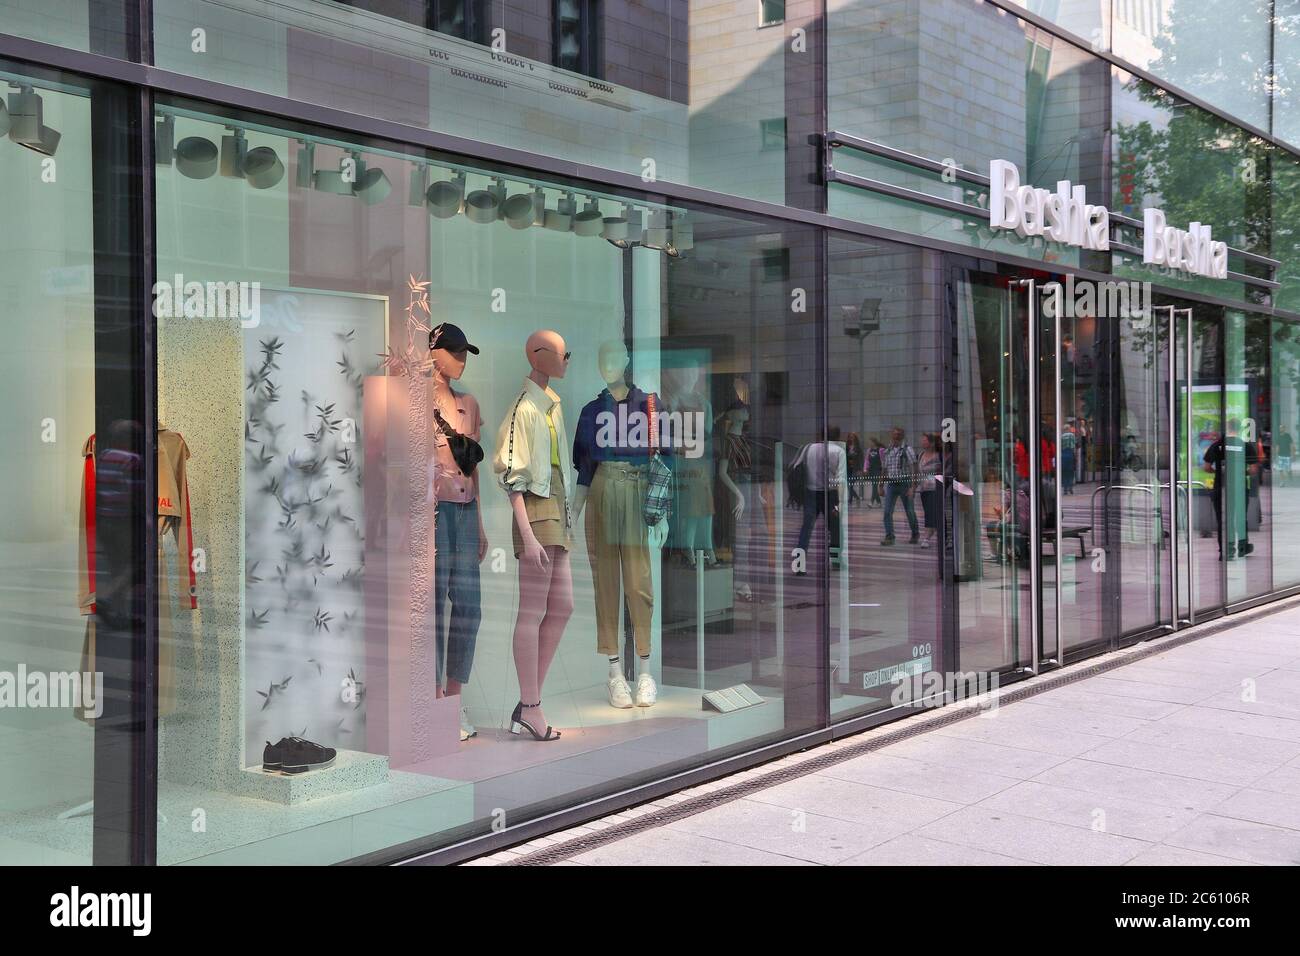 DRESDEN, GERMANY - MAY 10, 2018: Window display of Bershka clothes shop in Dresden, Germany. Bershka brand is part of Inditex fashion group. Stock Photo